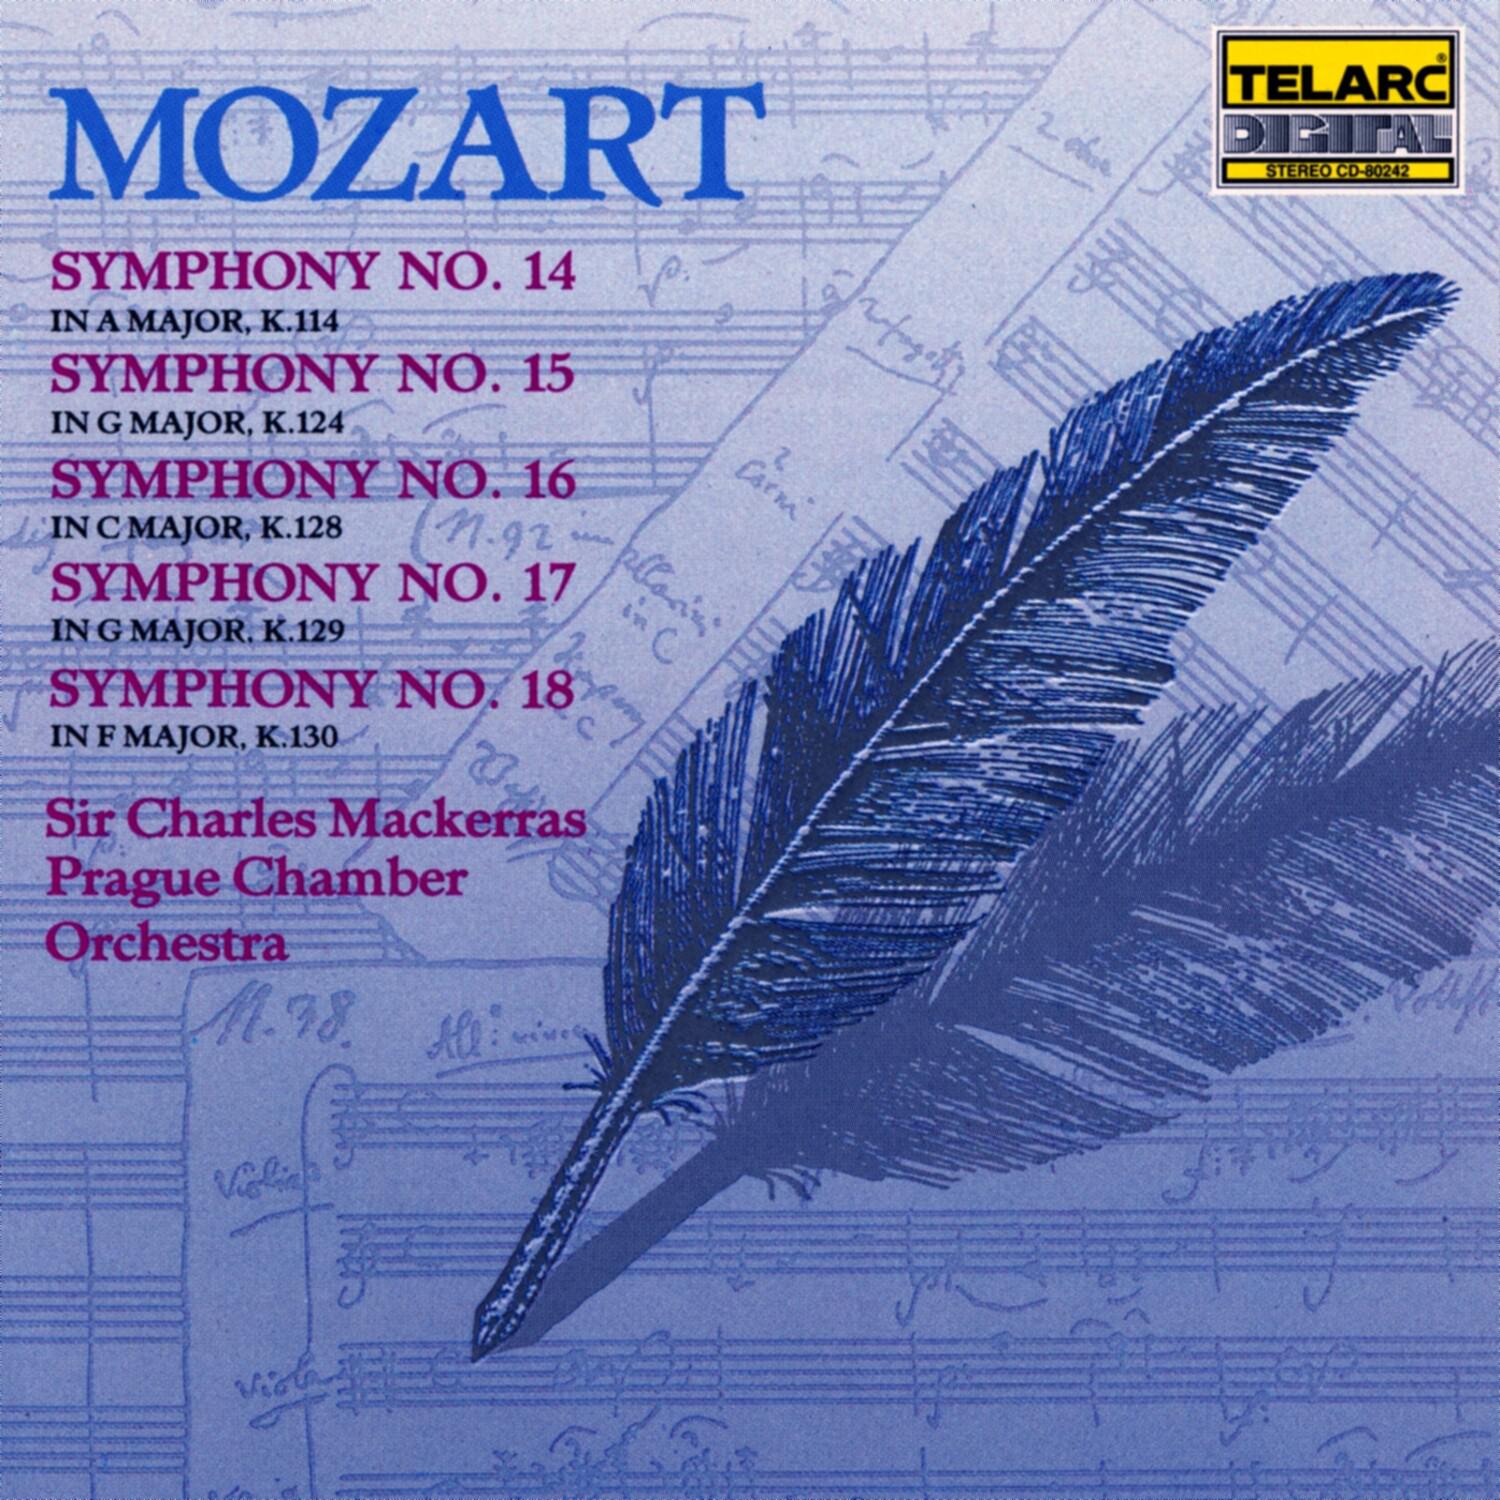 Symphony No. 18 in F major, K.130: I. Allegro